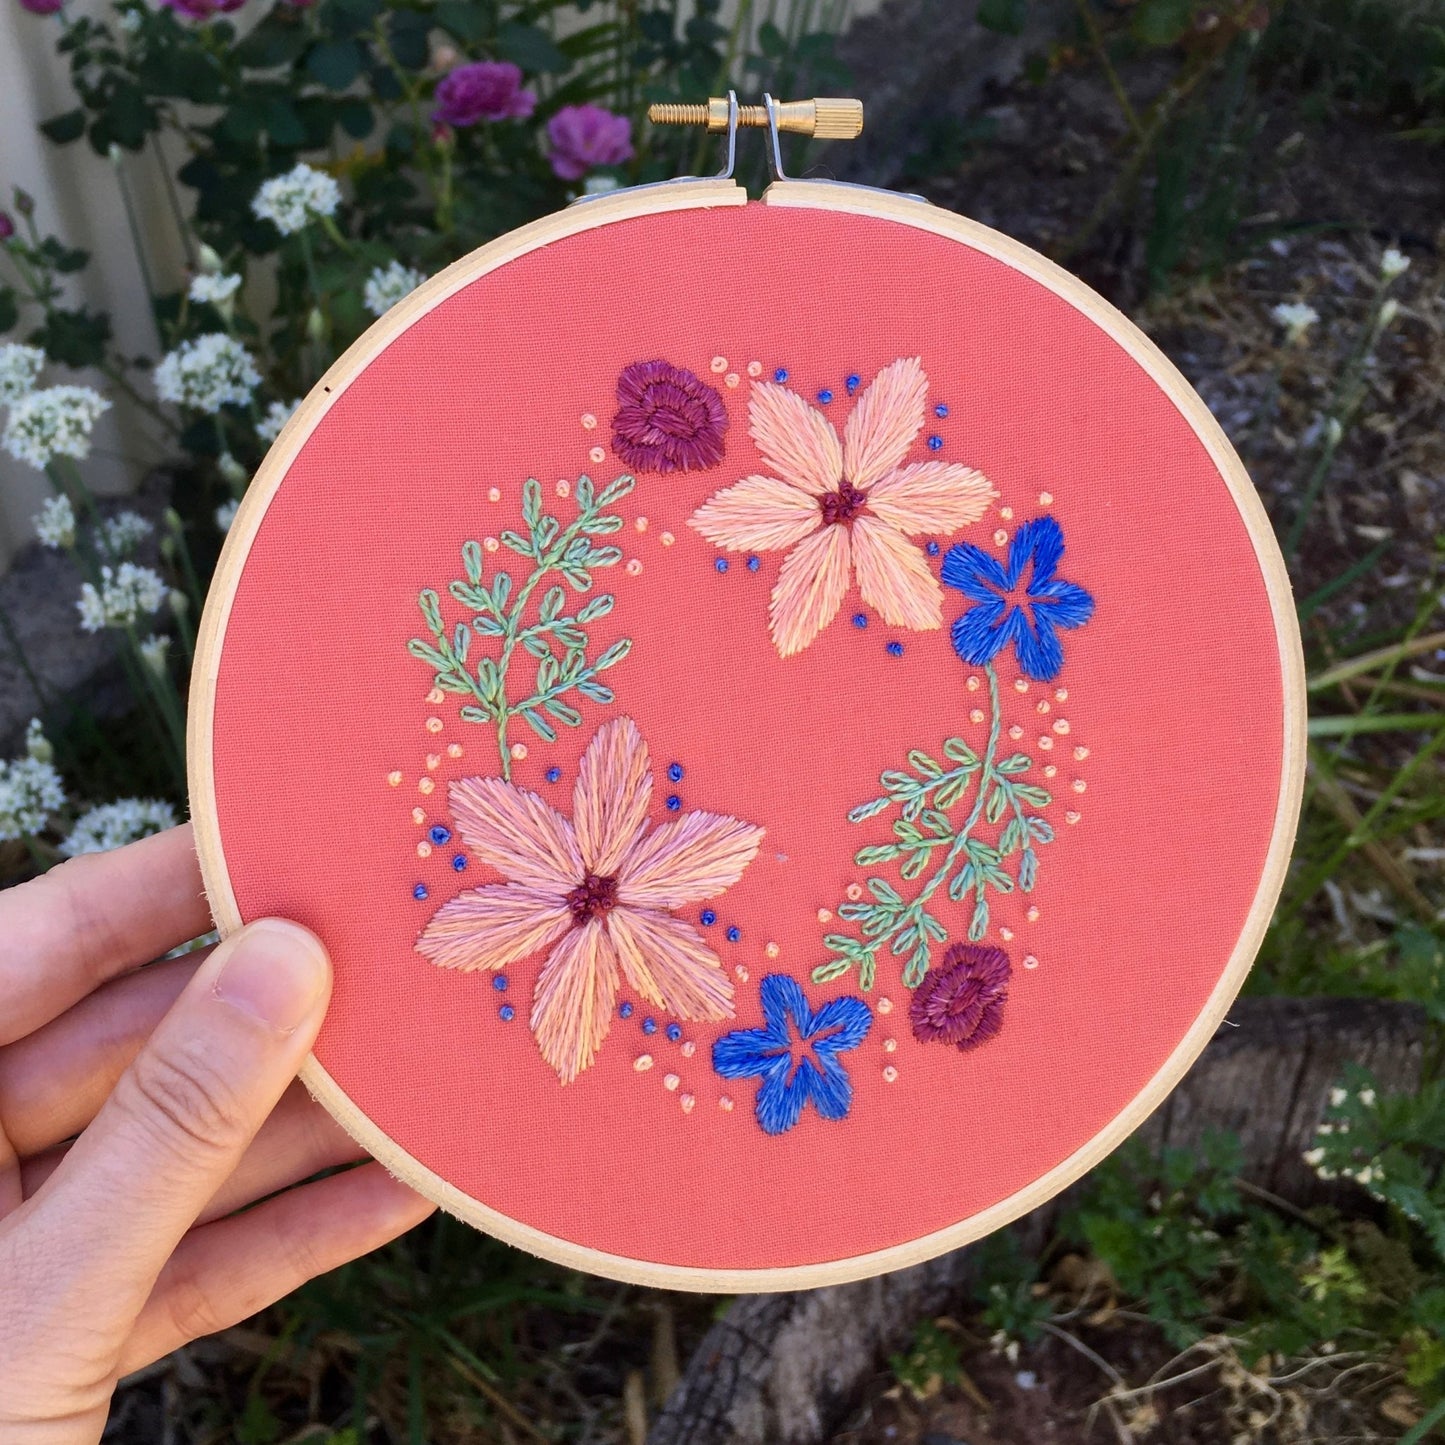 Spring Fling Modern Embroidery Kit - Craft Make Do